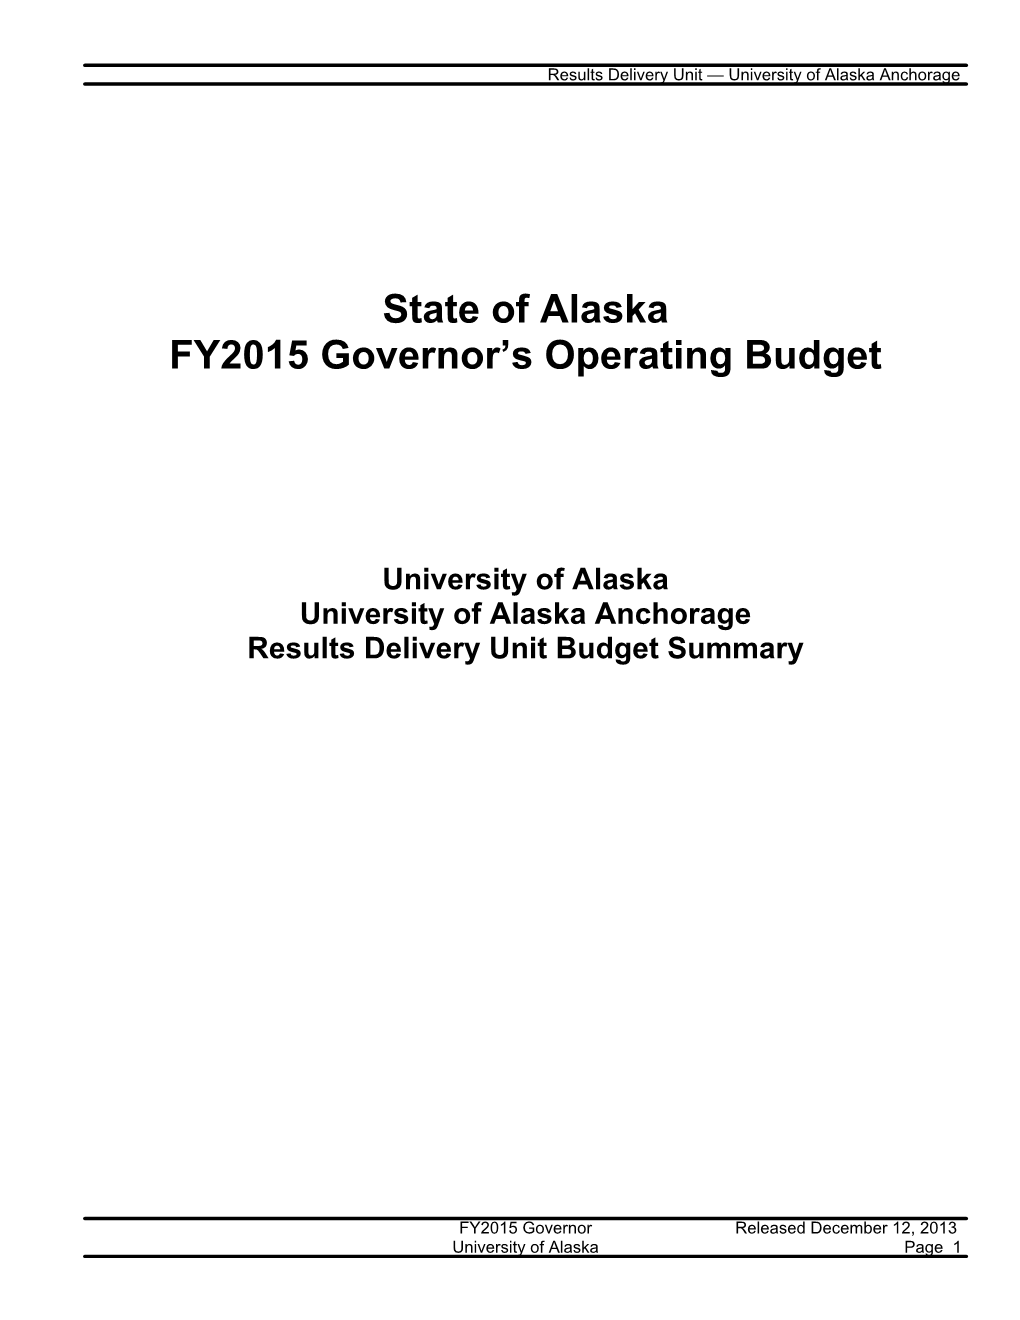 State of Alaska FY2015 Governor's Operating Budget